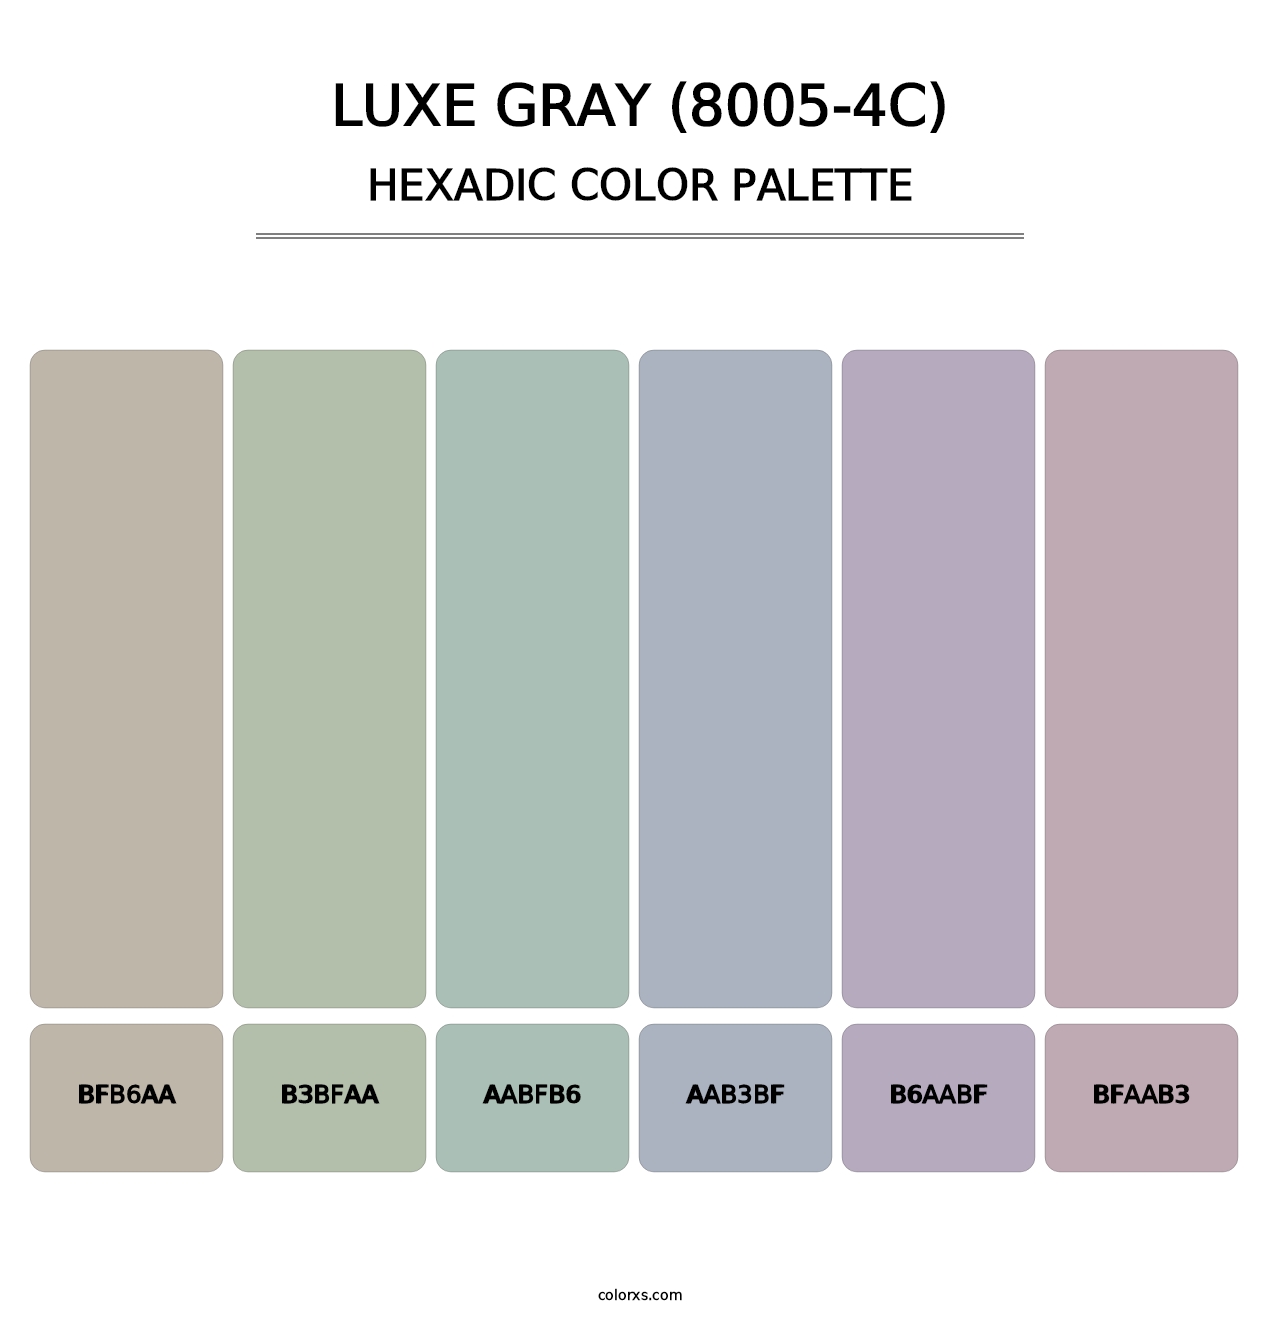 Luxe Gray (8005-4C) - Hexadic Color Palette